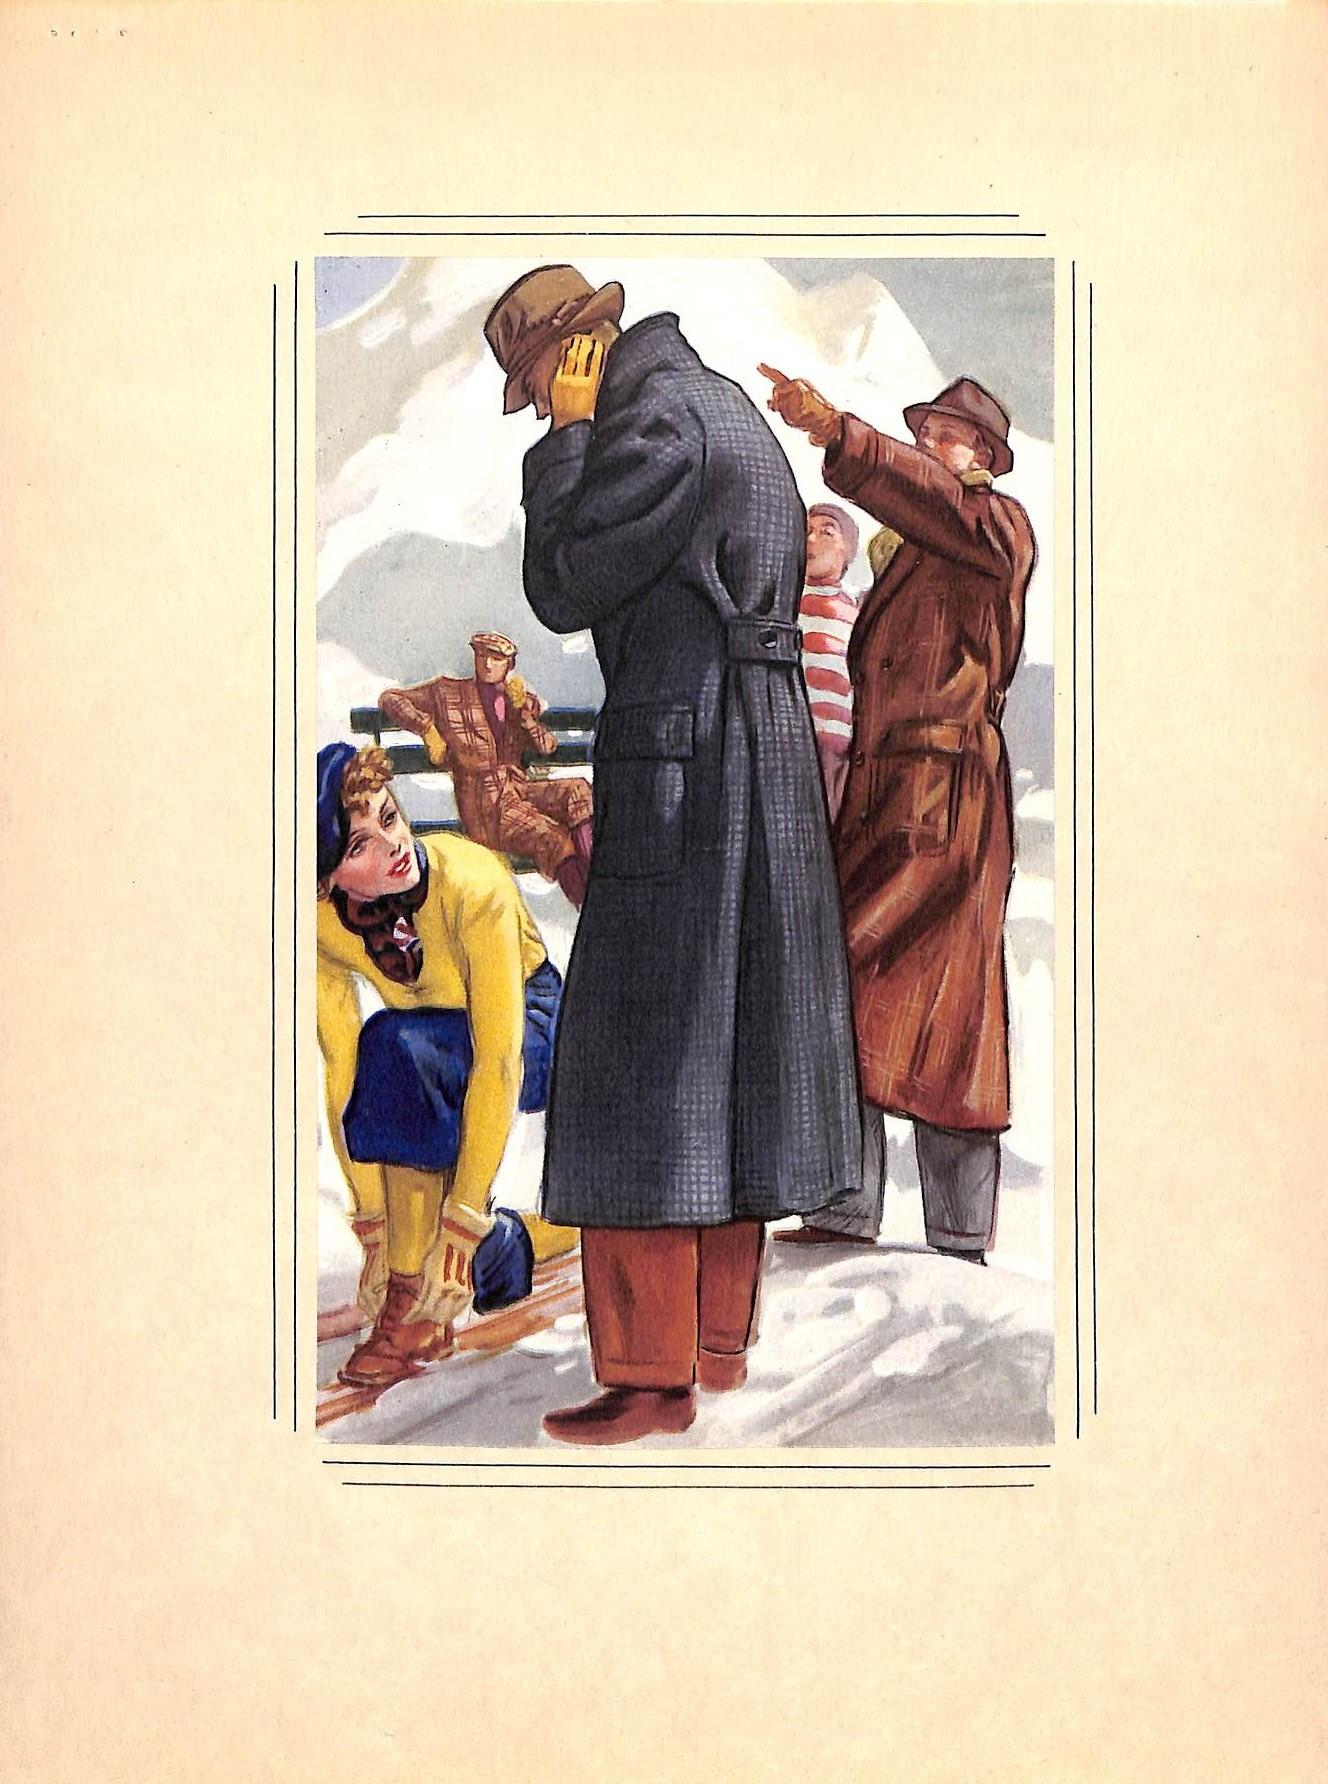 Vintage c1930s Menswear Illustration Art - Print by John T. Rowe